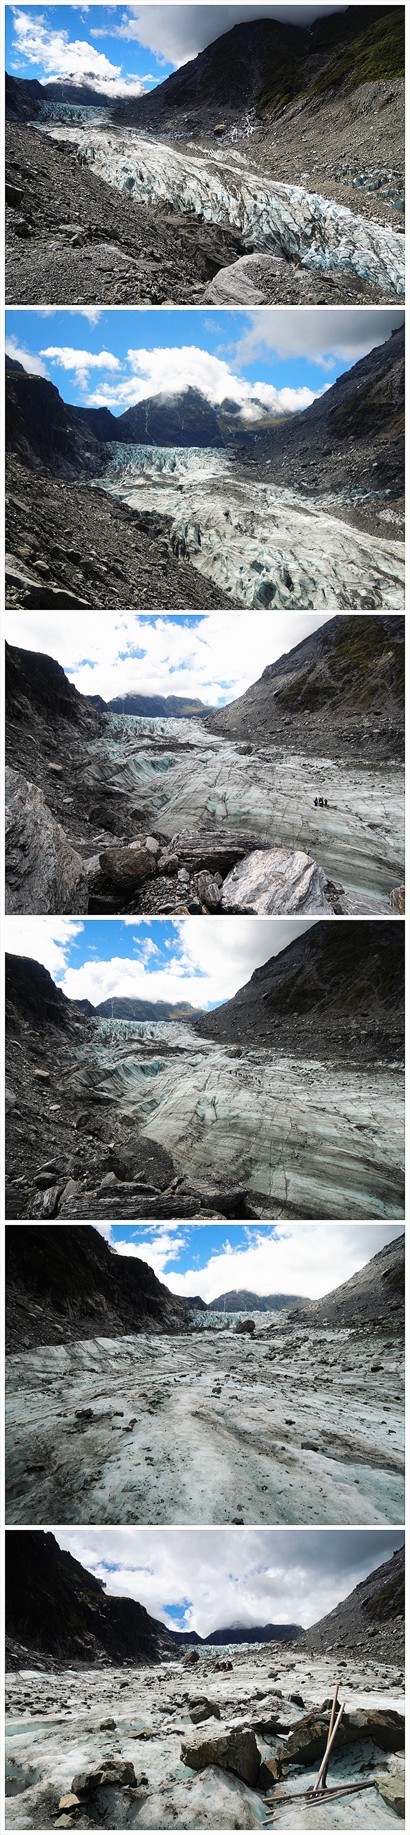 fox glacier，可看見有其他tour的人和工作人員在冰川上行走、工作